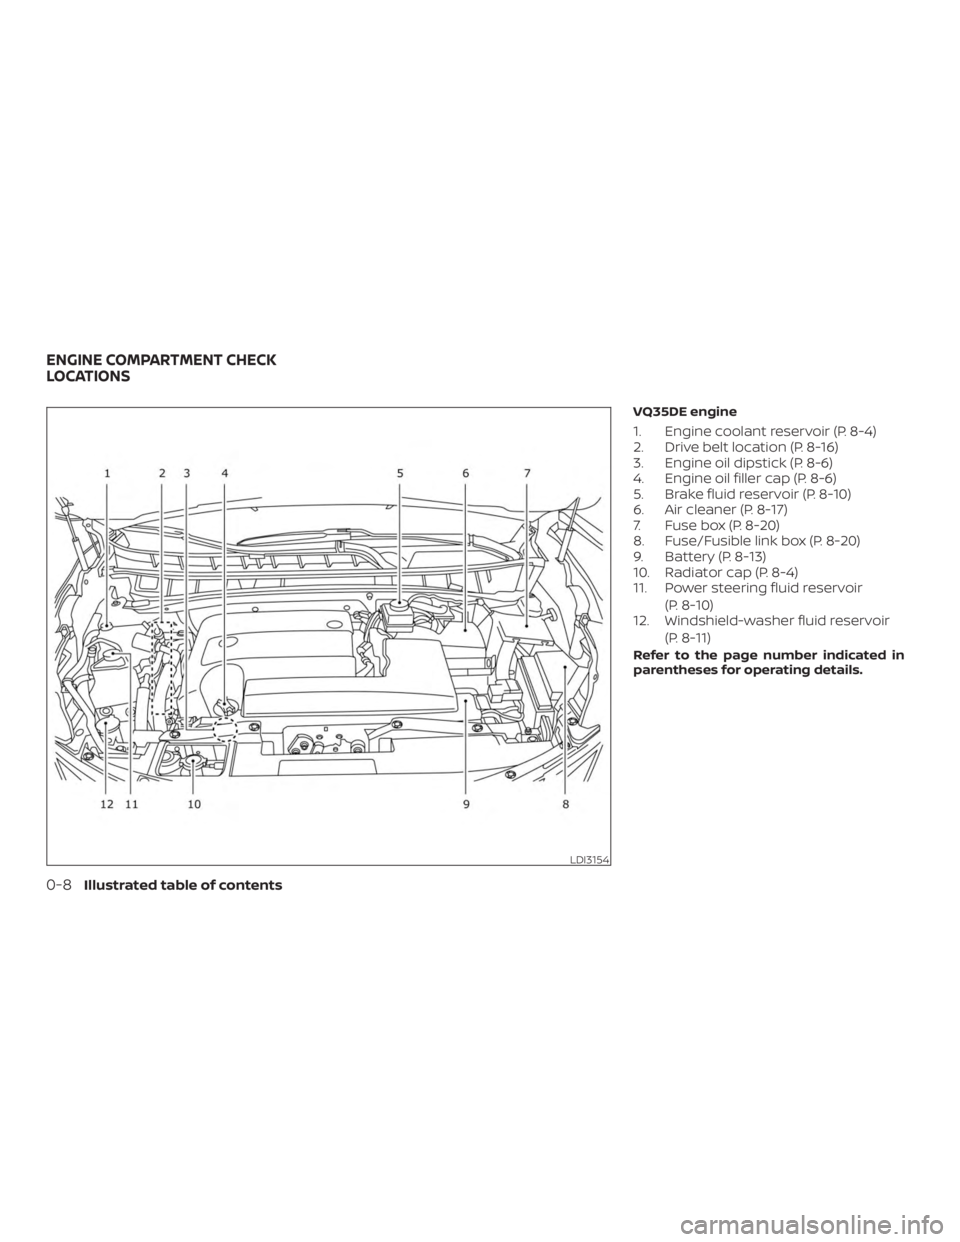 NISSAN MURANO 2018  Owner´s Manual VQ35DE engine
1. Engine coolant reservoir (P. 8-4)
2. Drive belt location (P. 8-16)
3. Engine oil dipstick (P. 8-6)
4. Engine oil filler cap (P. 8-6)
5. Brake fluid reservoir (P. 8-10)
6. Air cleaner 